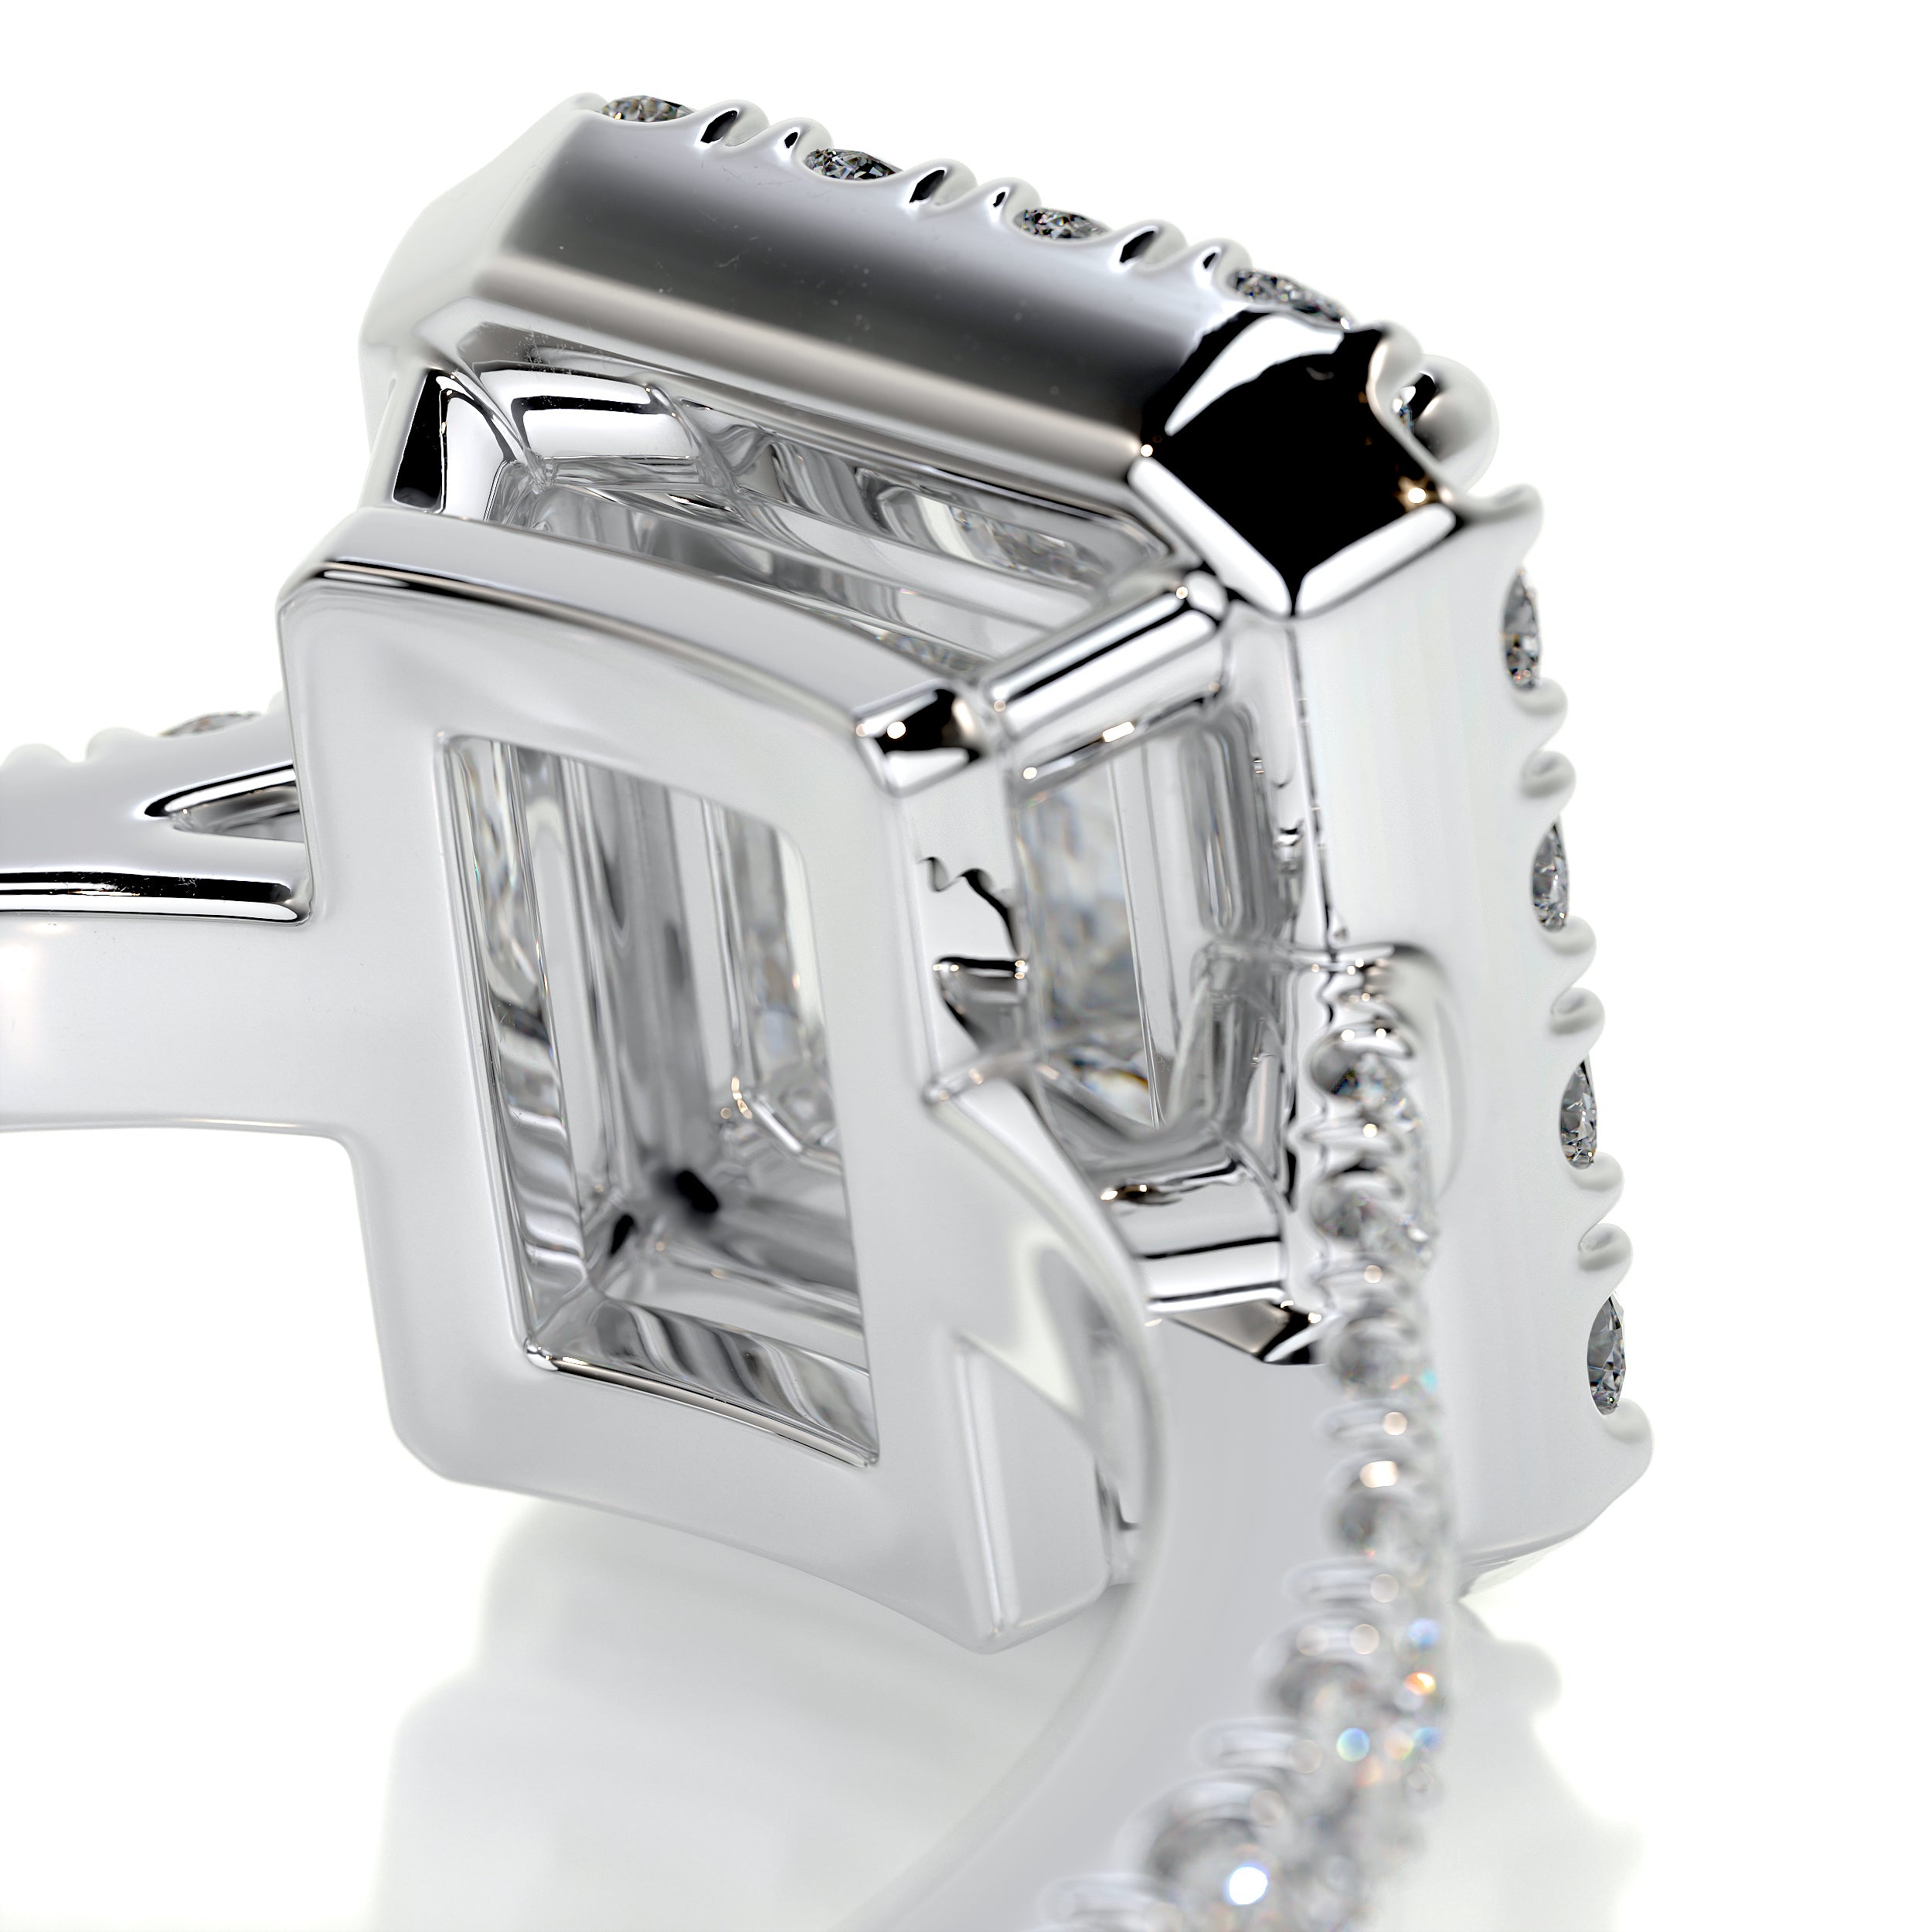 Zoey Diamond Engagement Ring -18K White Gold